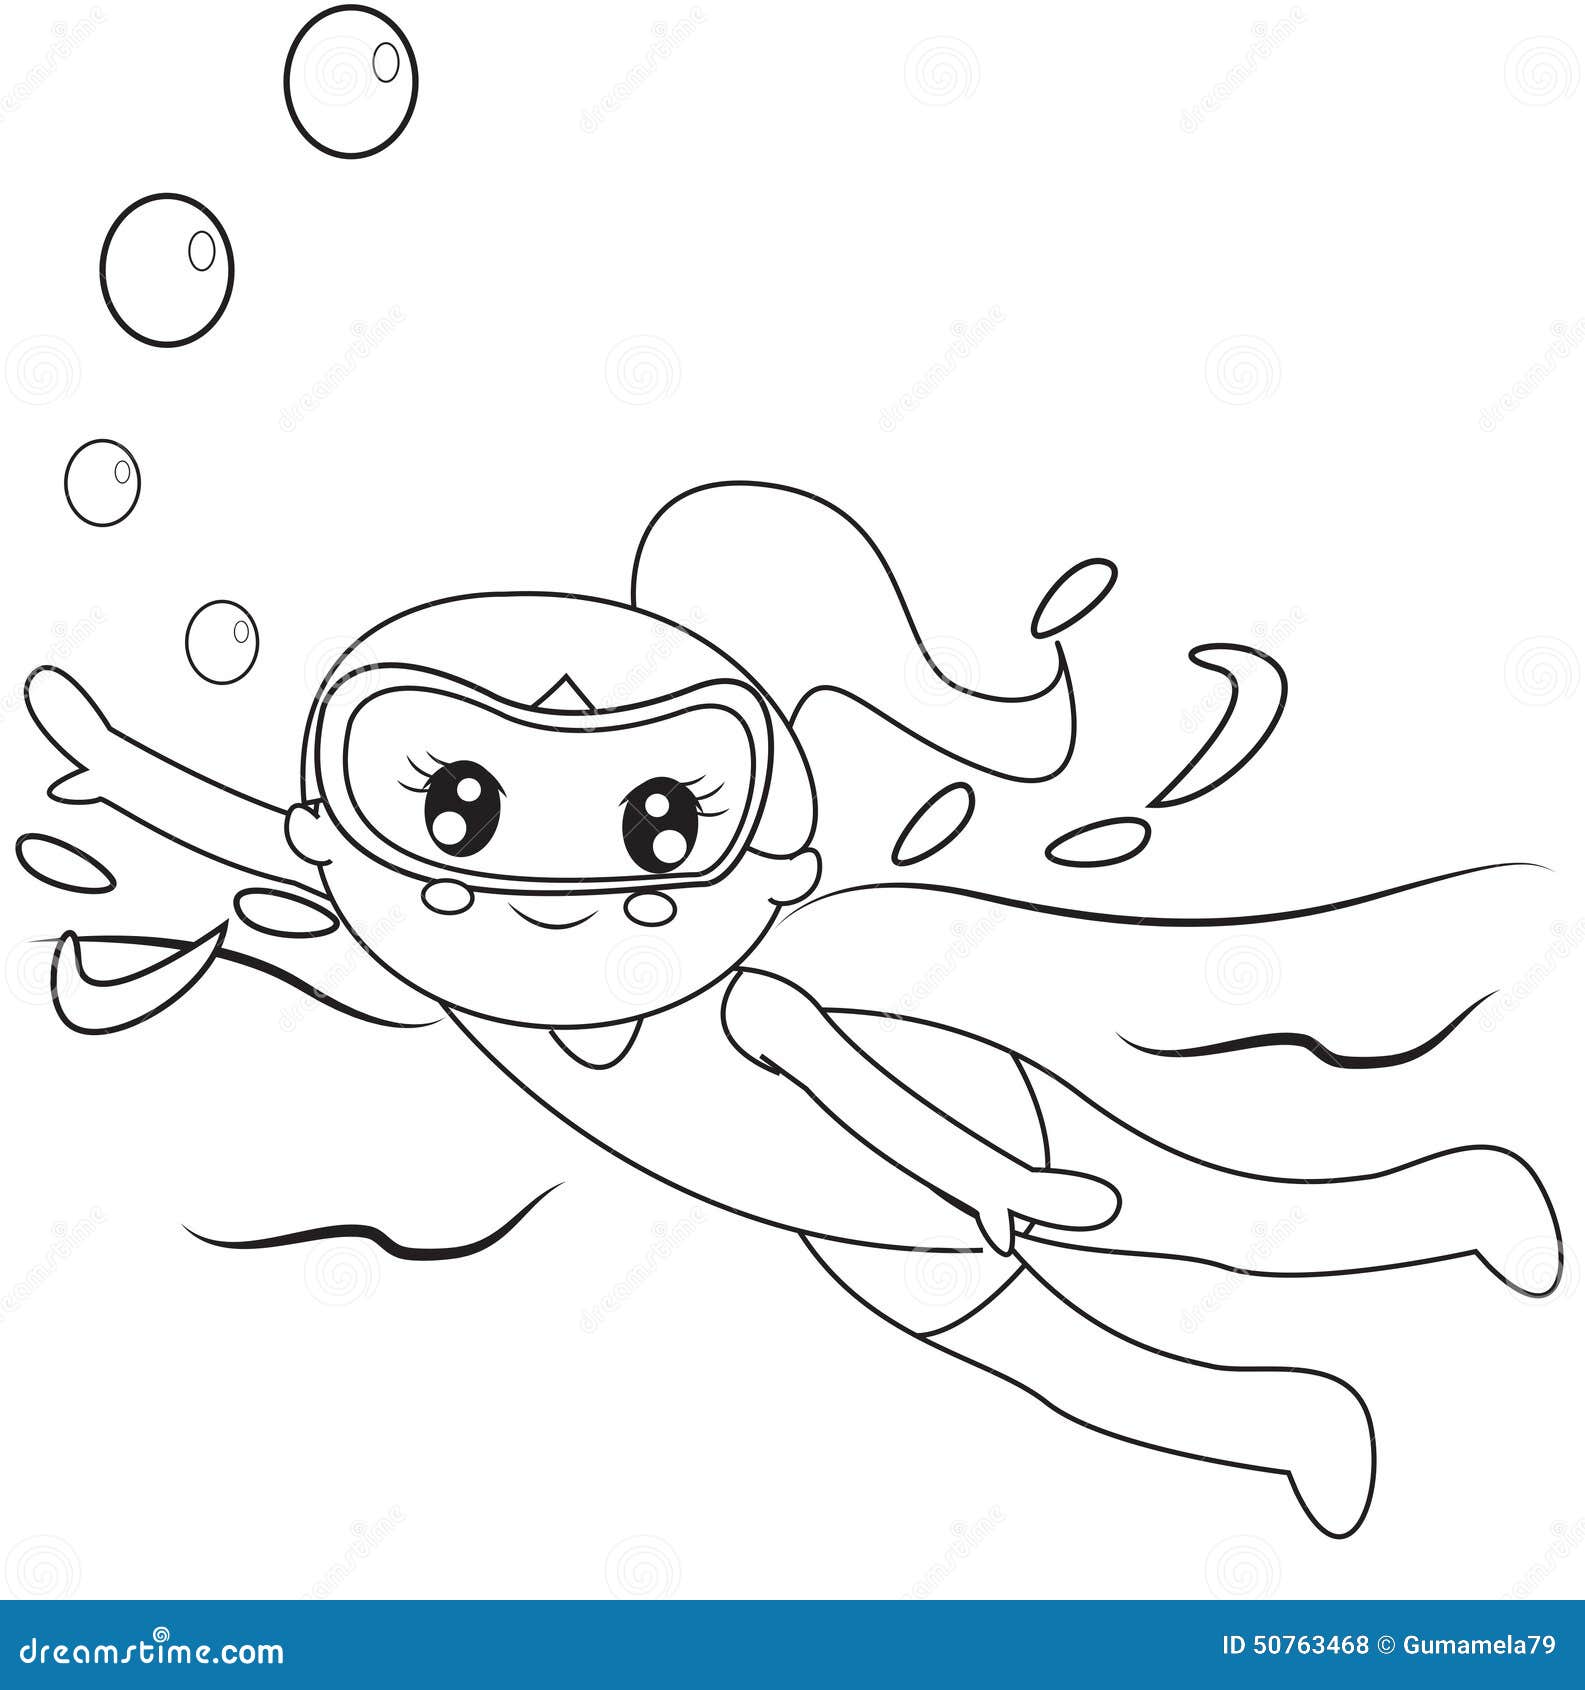 Swimmer coloring page stock illustration illustration of artwork